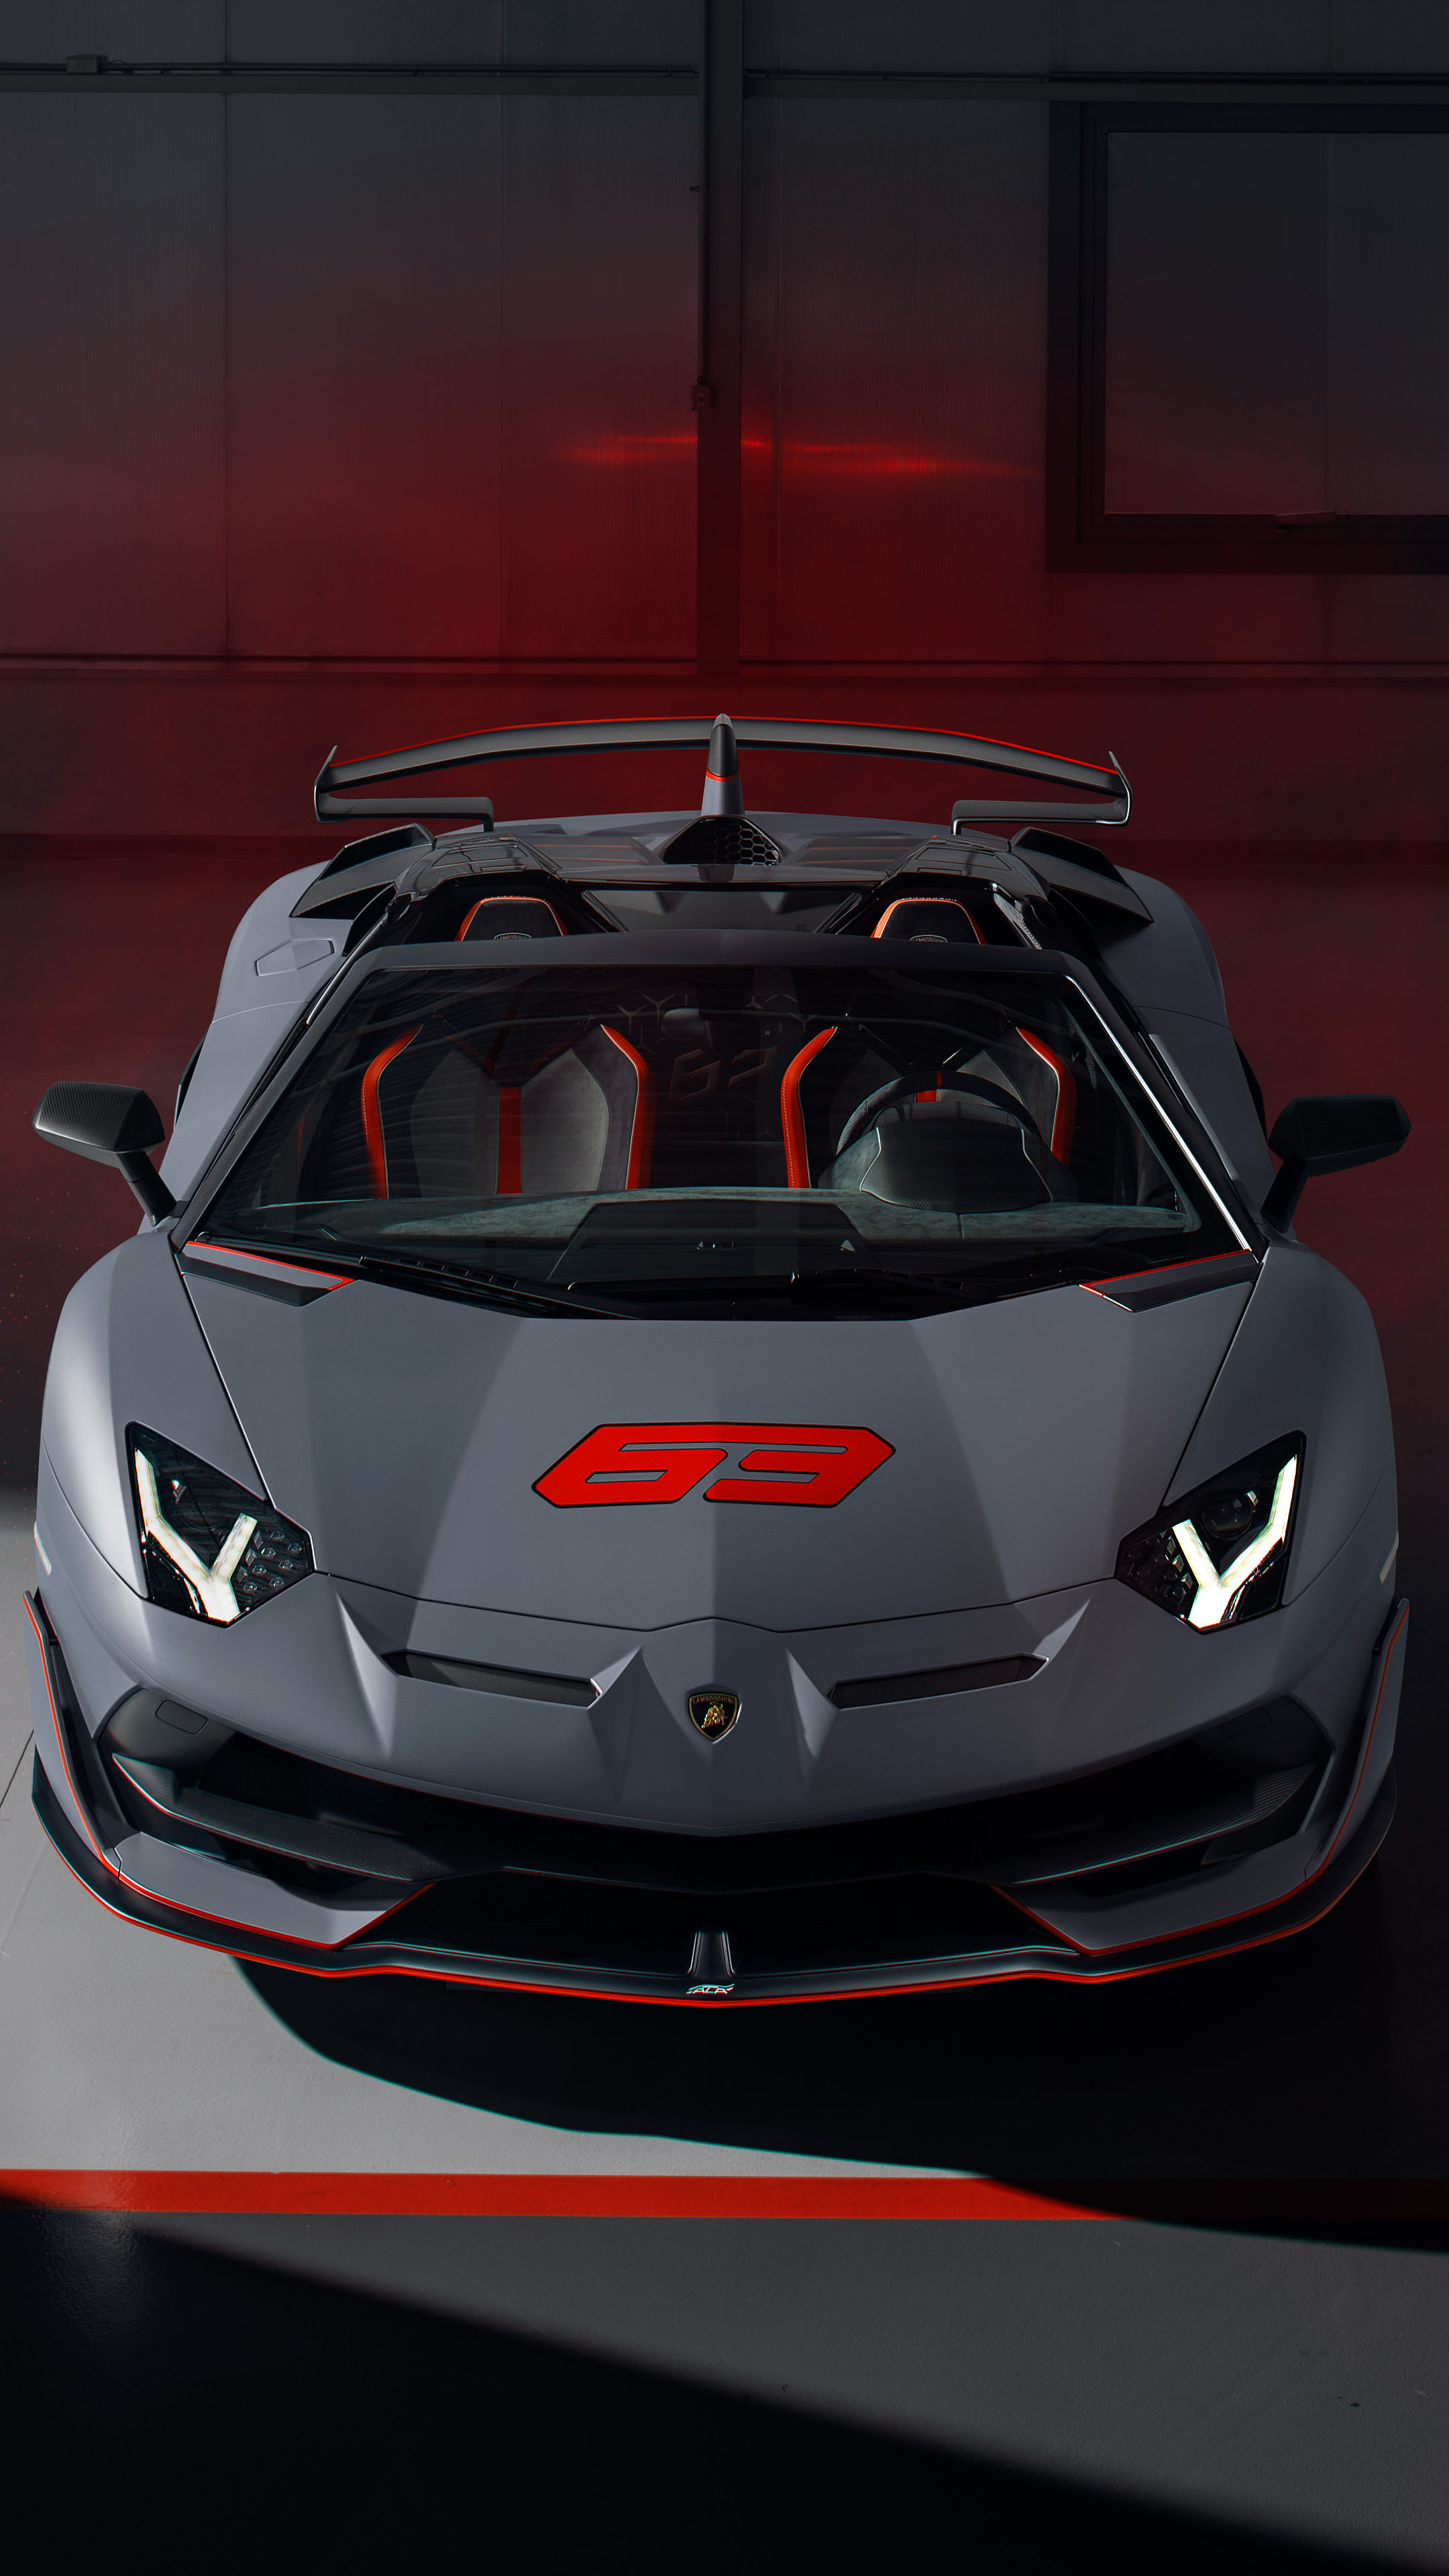 Lamborghini Aventador High Resolution Pictures - All HD 